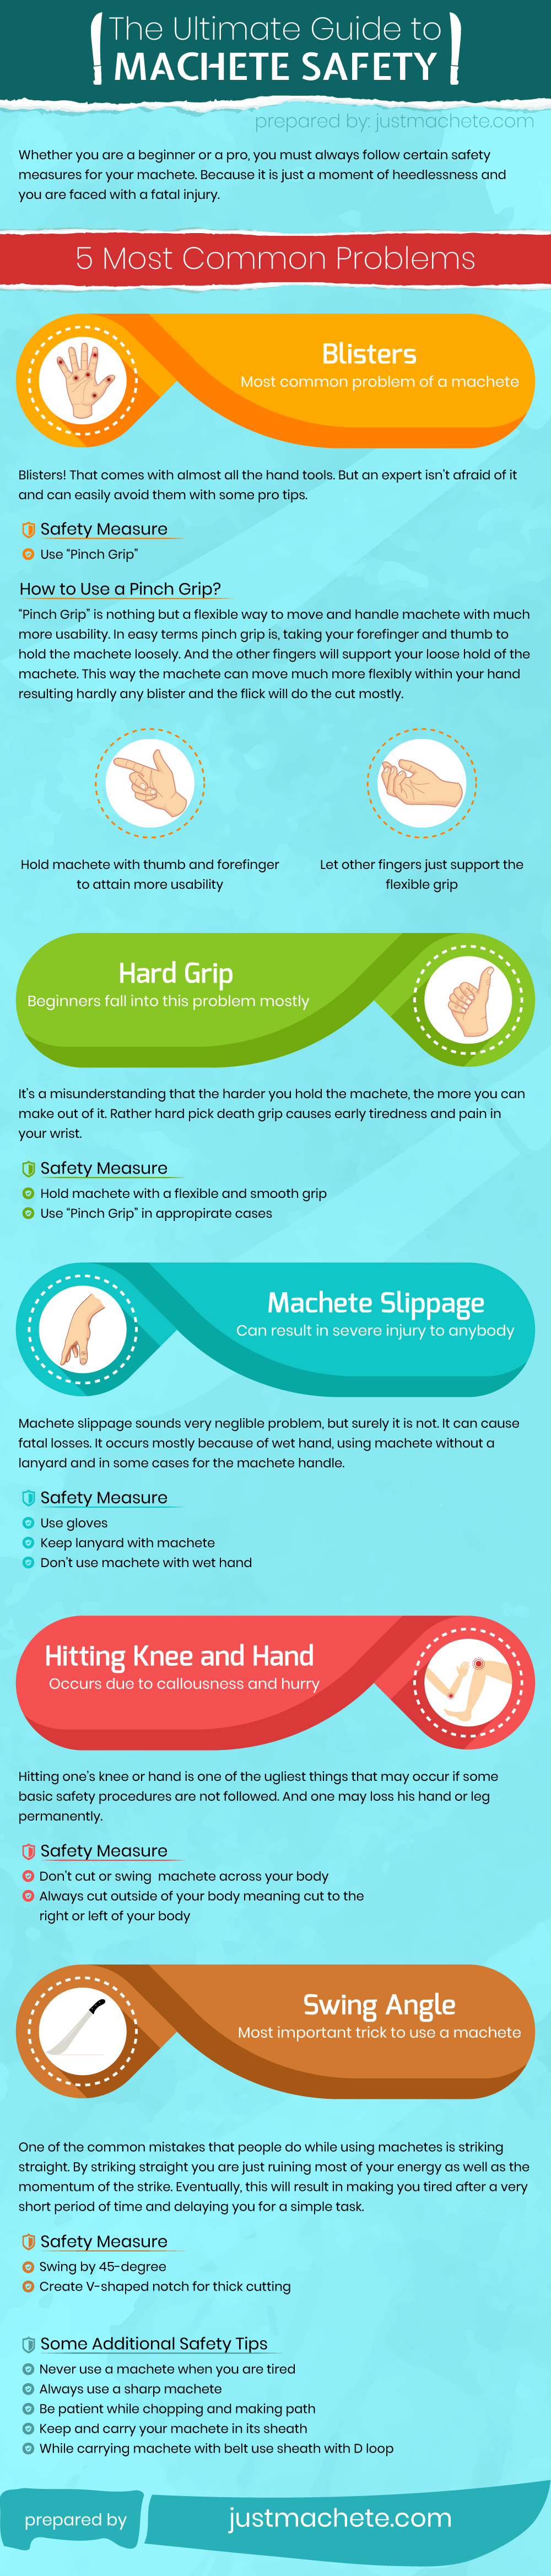 How-to-use-a-machete-safely-infogrpahics